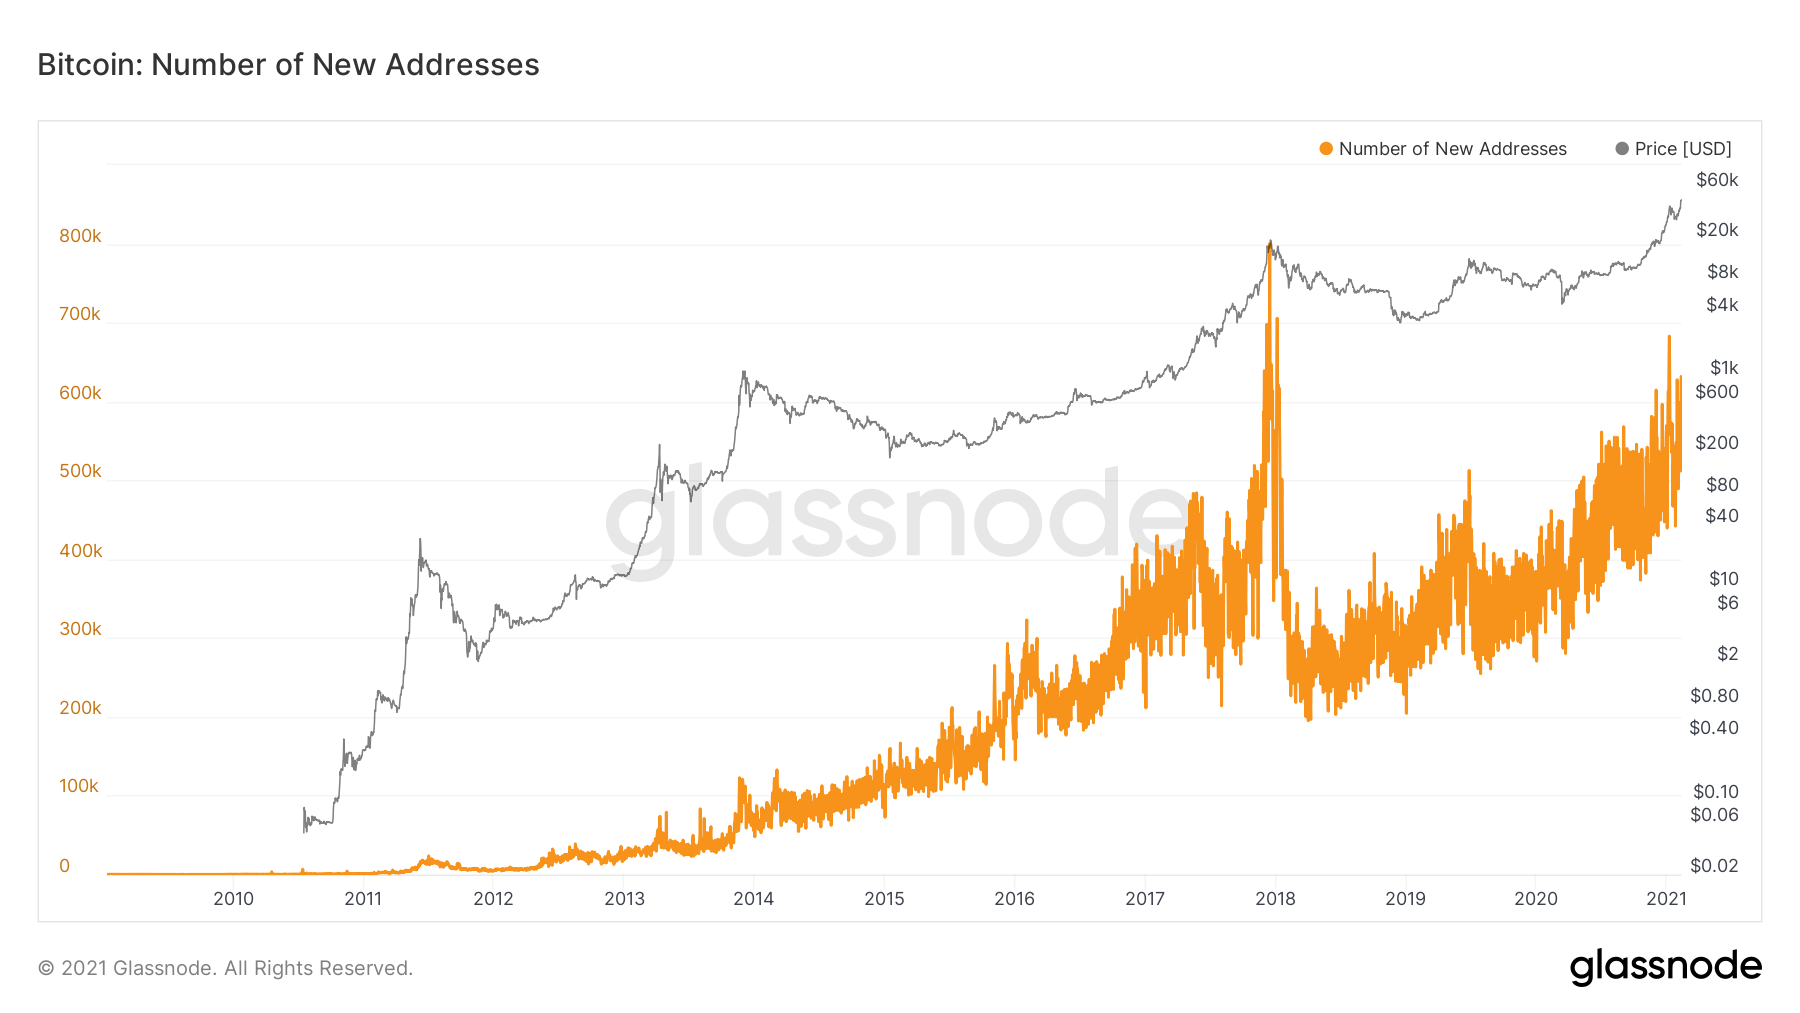 Bitcoin network growth